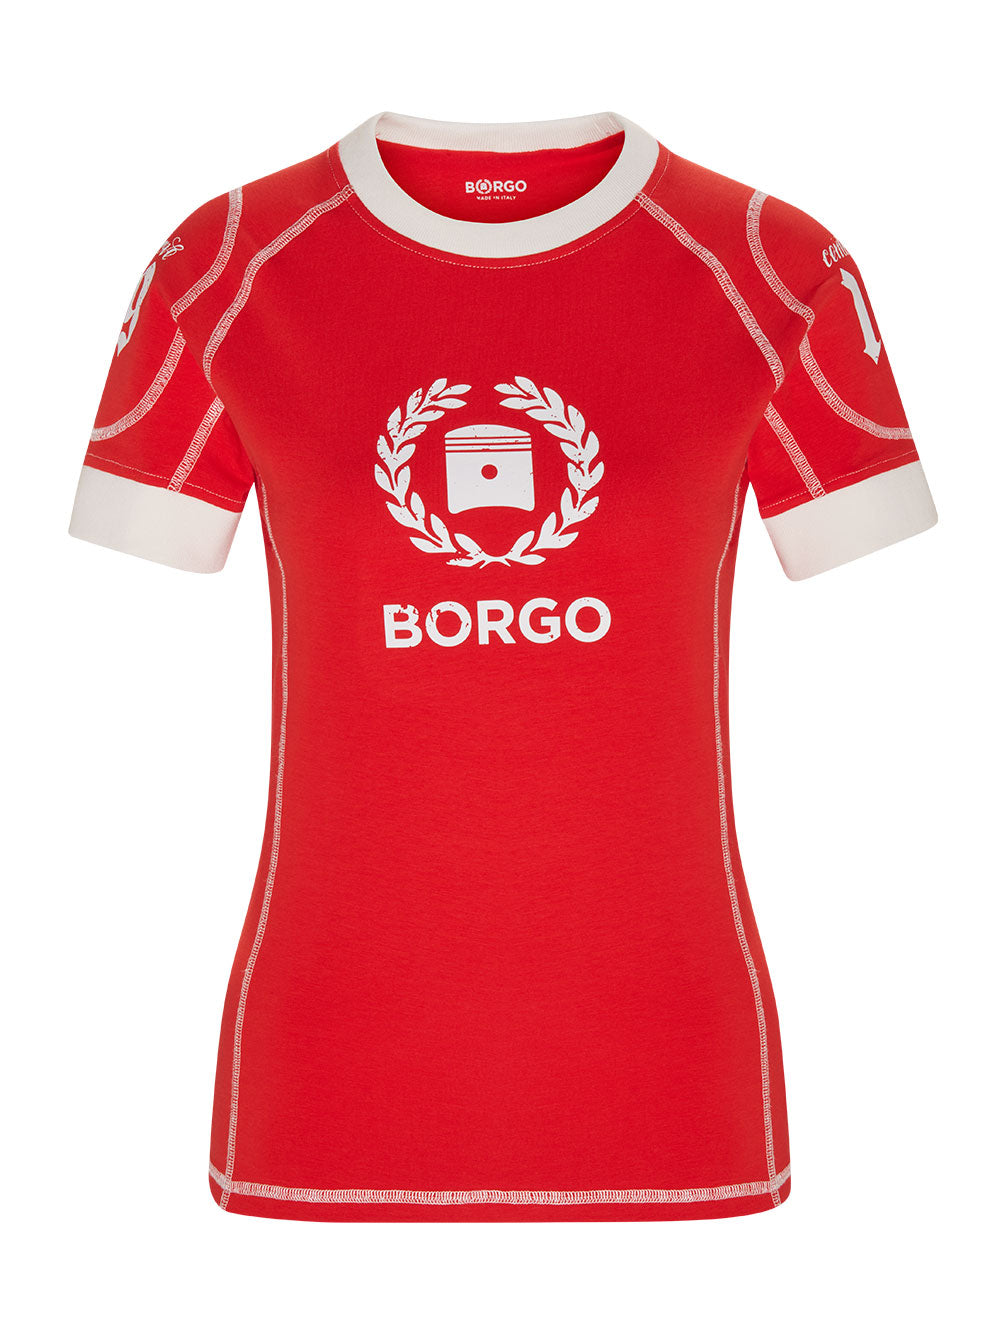 BORGO Andalusien Diablo Rosso T-Shirt